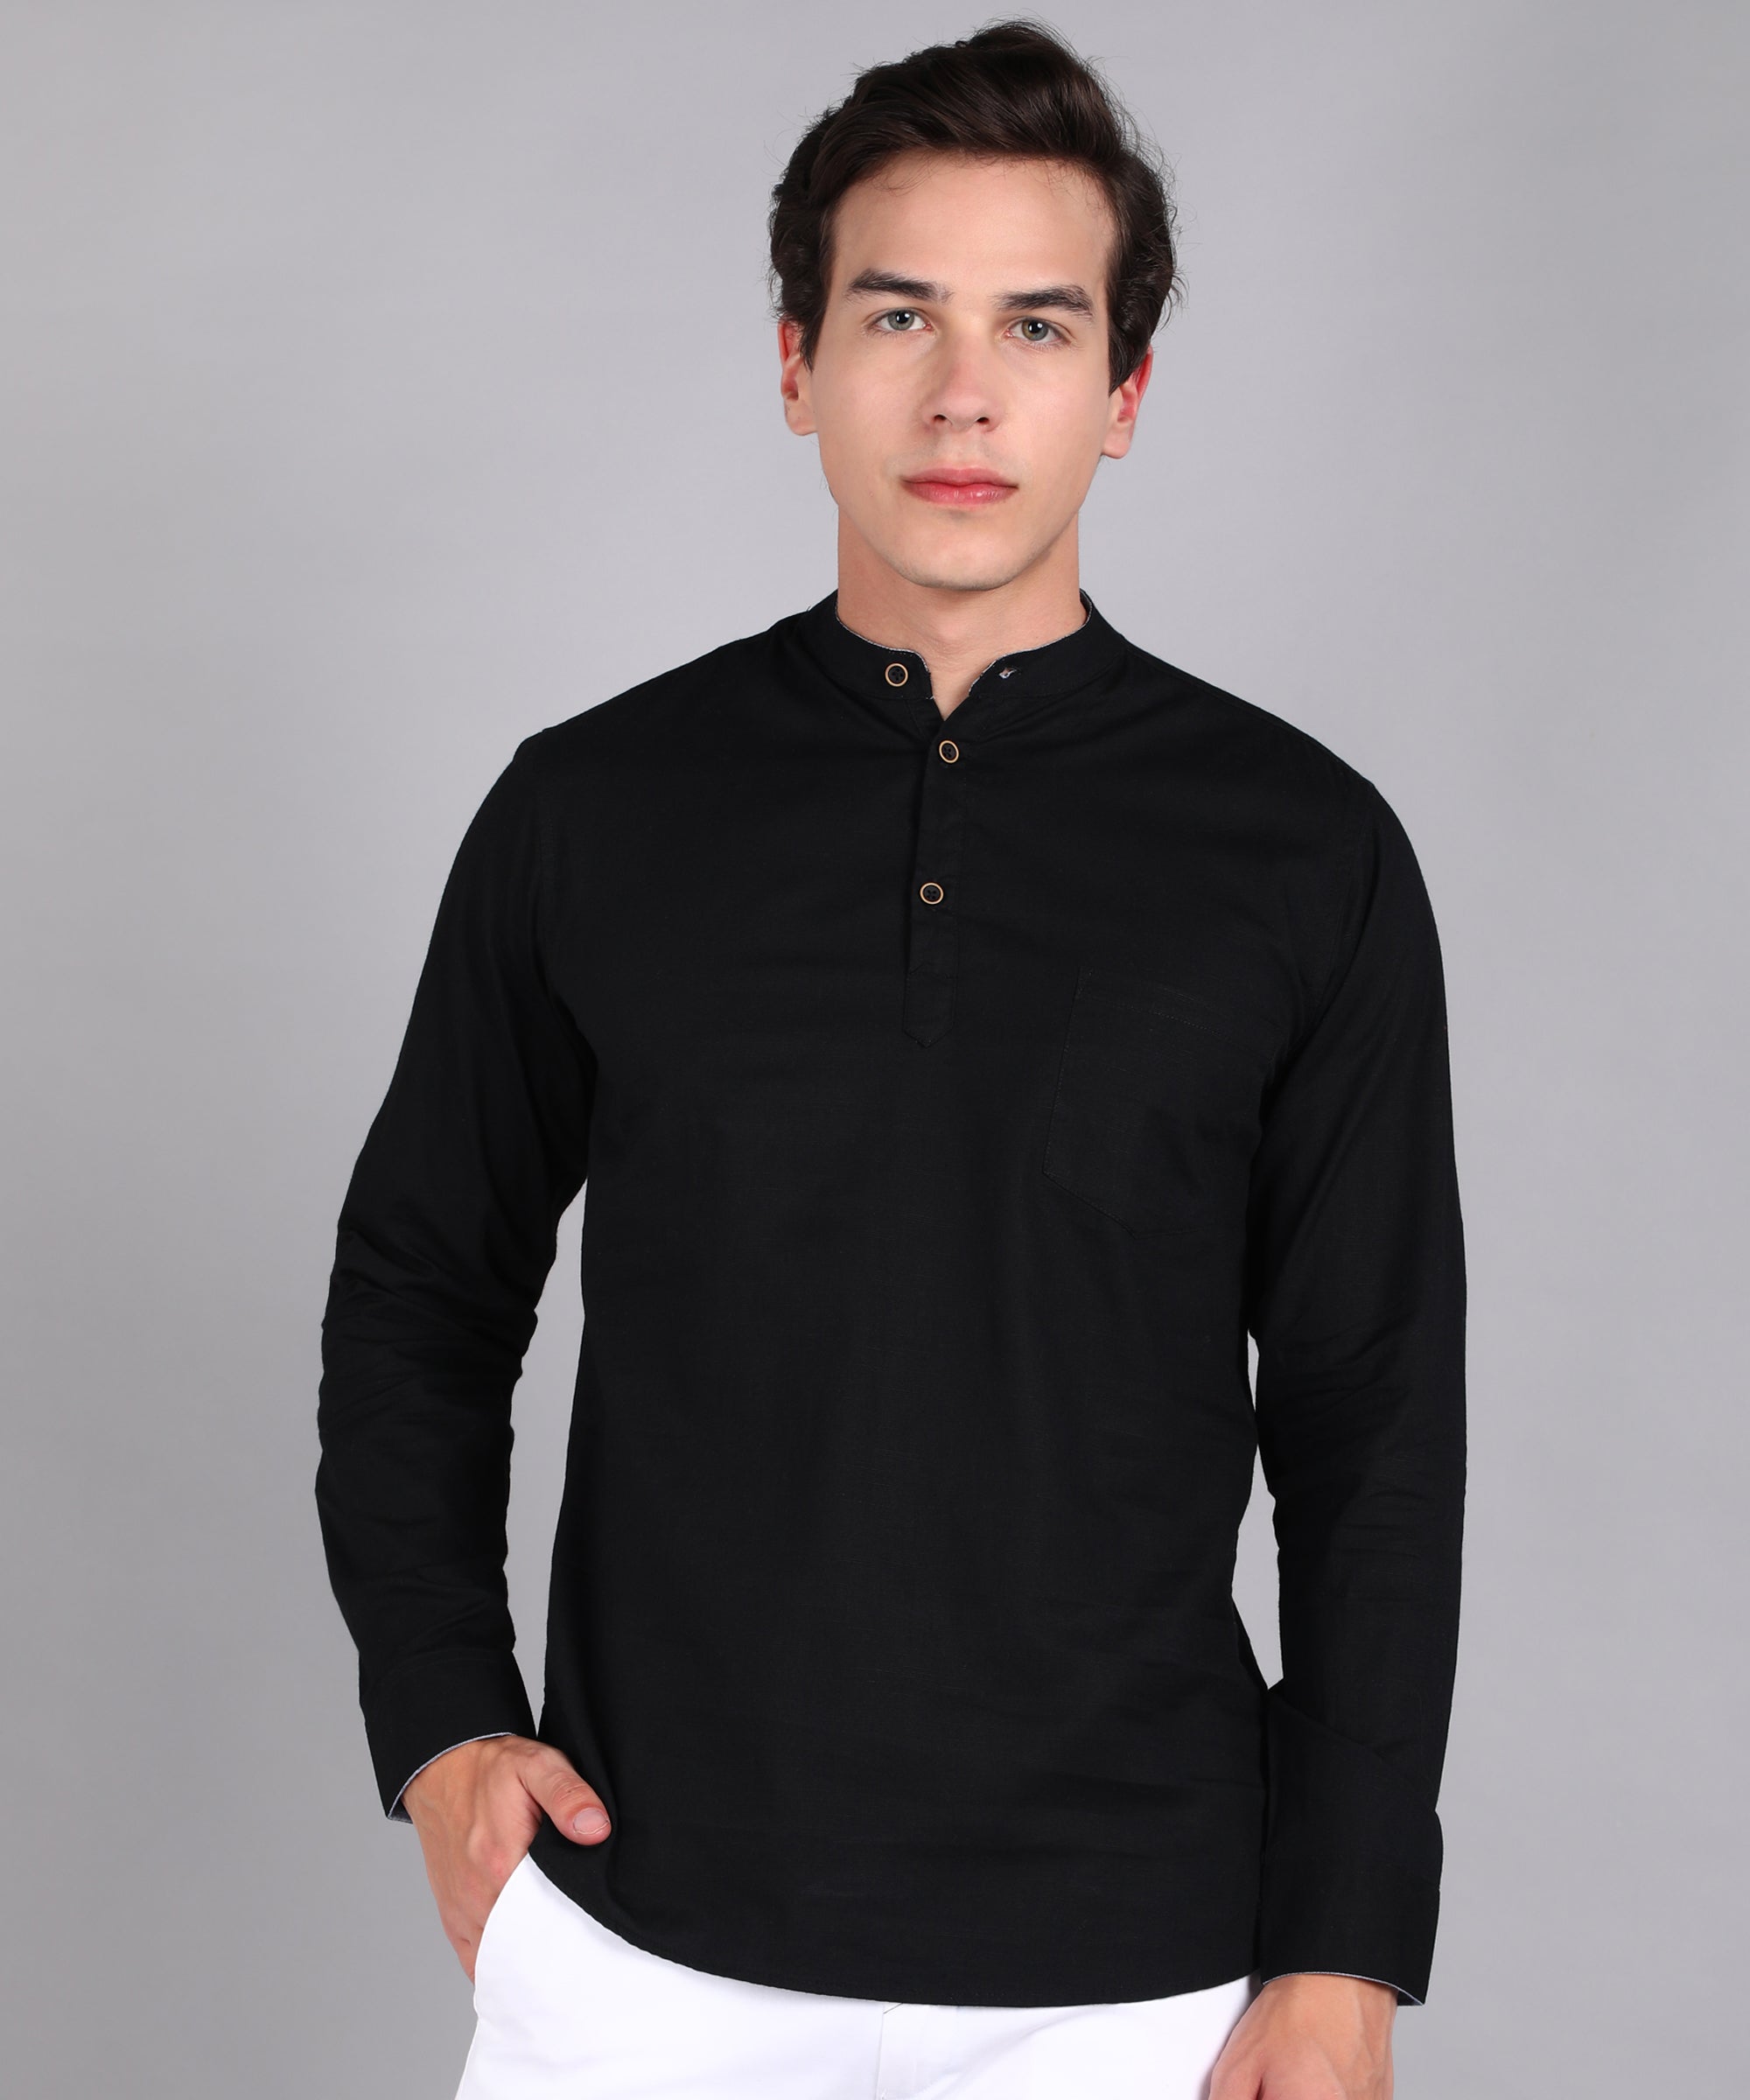 Men's Black Cotton Full Sleeve Slim Fit Solid Shirt with Mandarin Collar